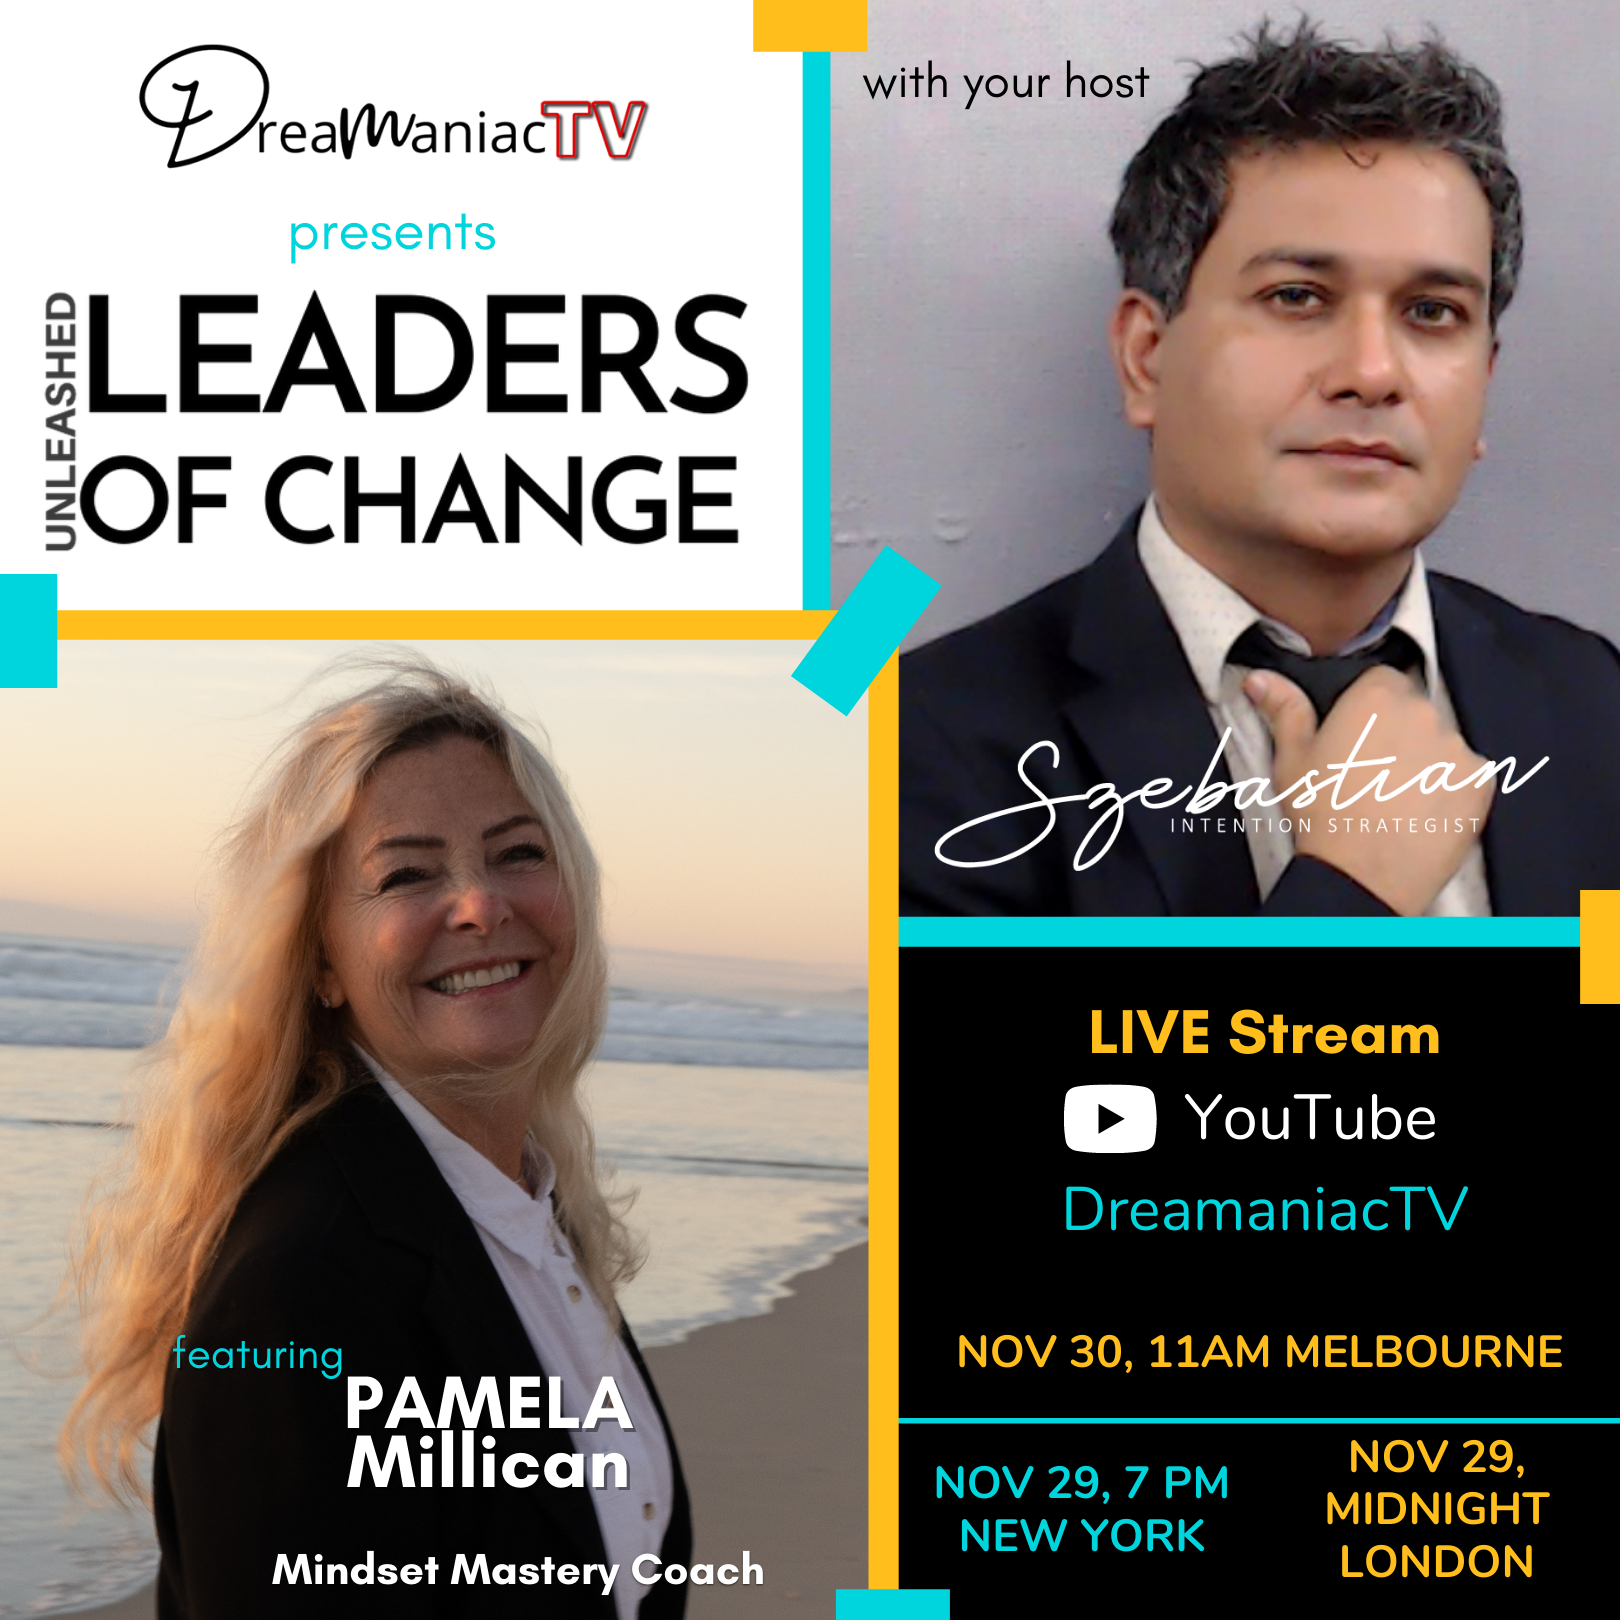 Pamela Millican "LEADERS OF CHANGE"